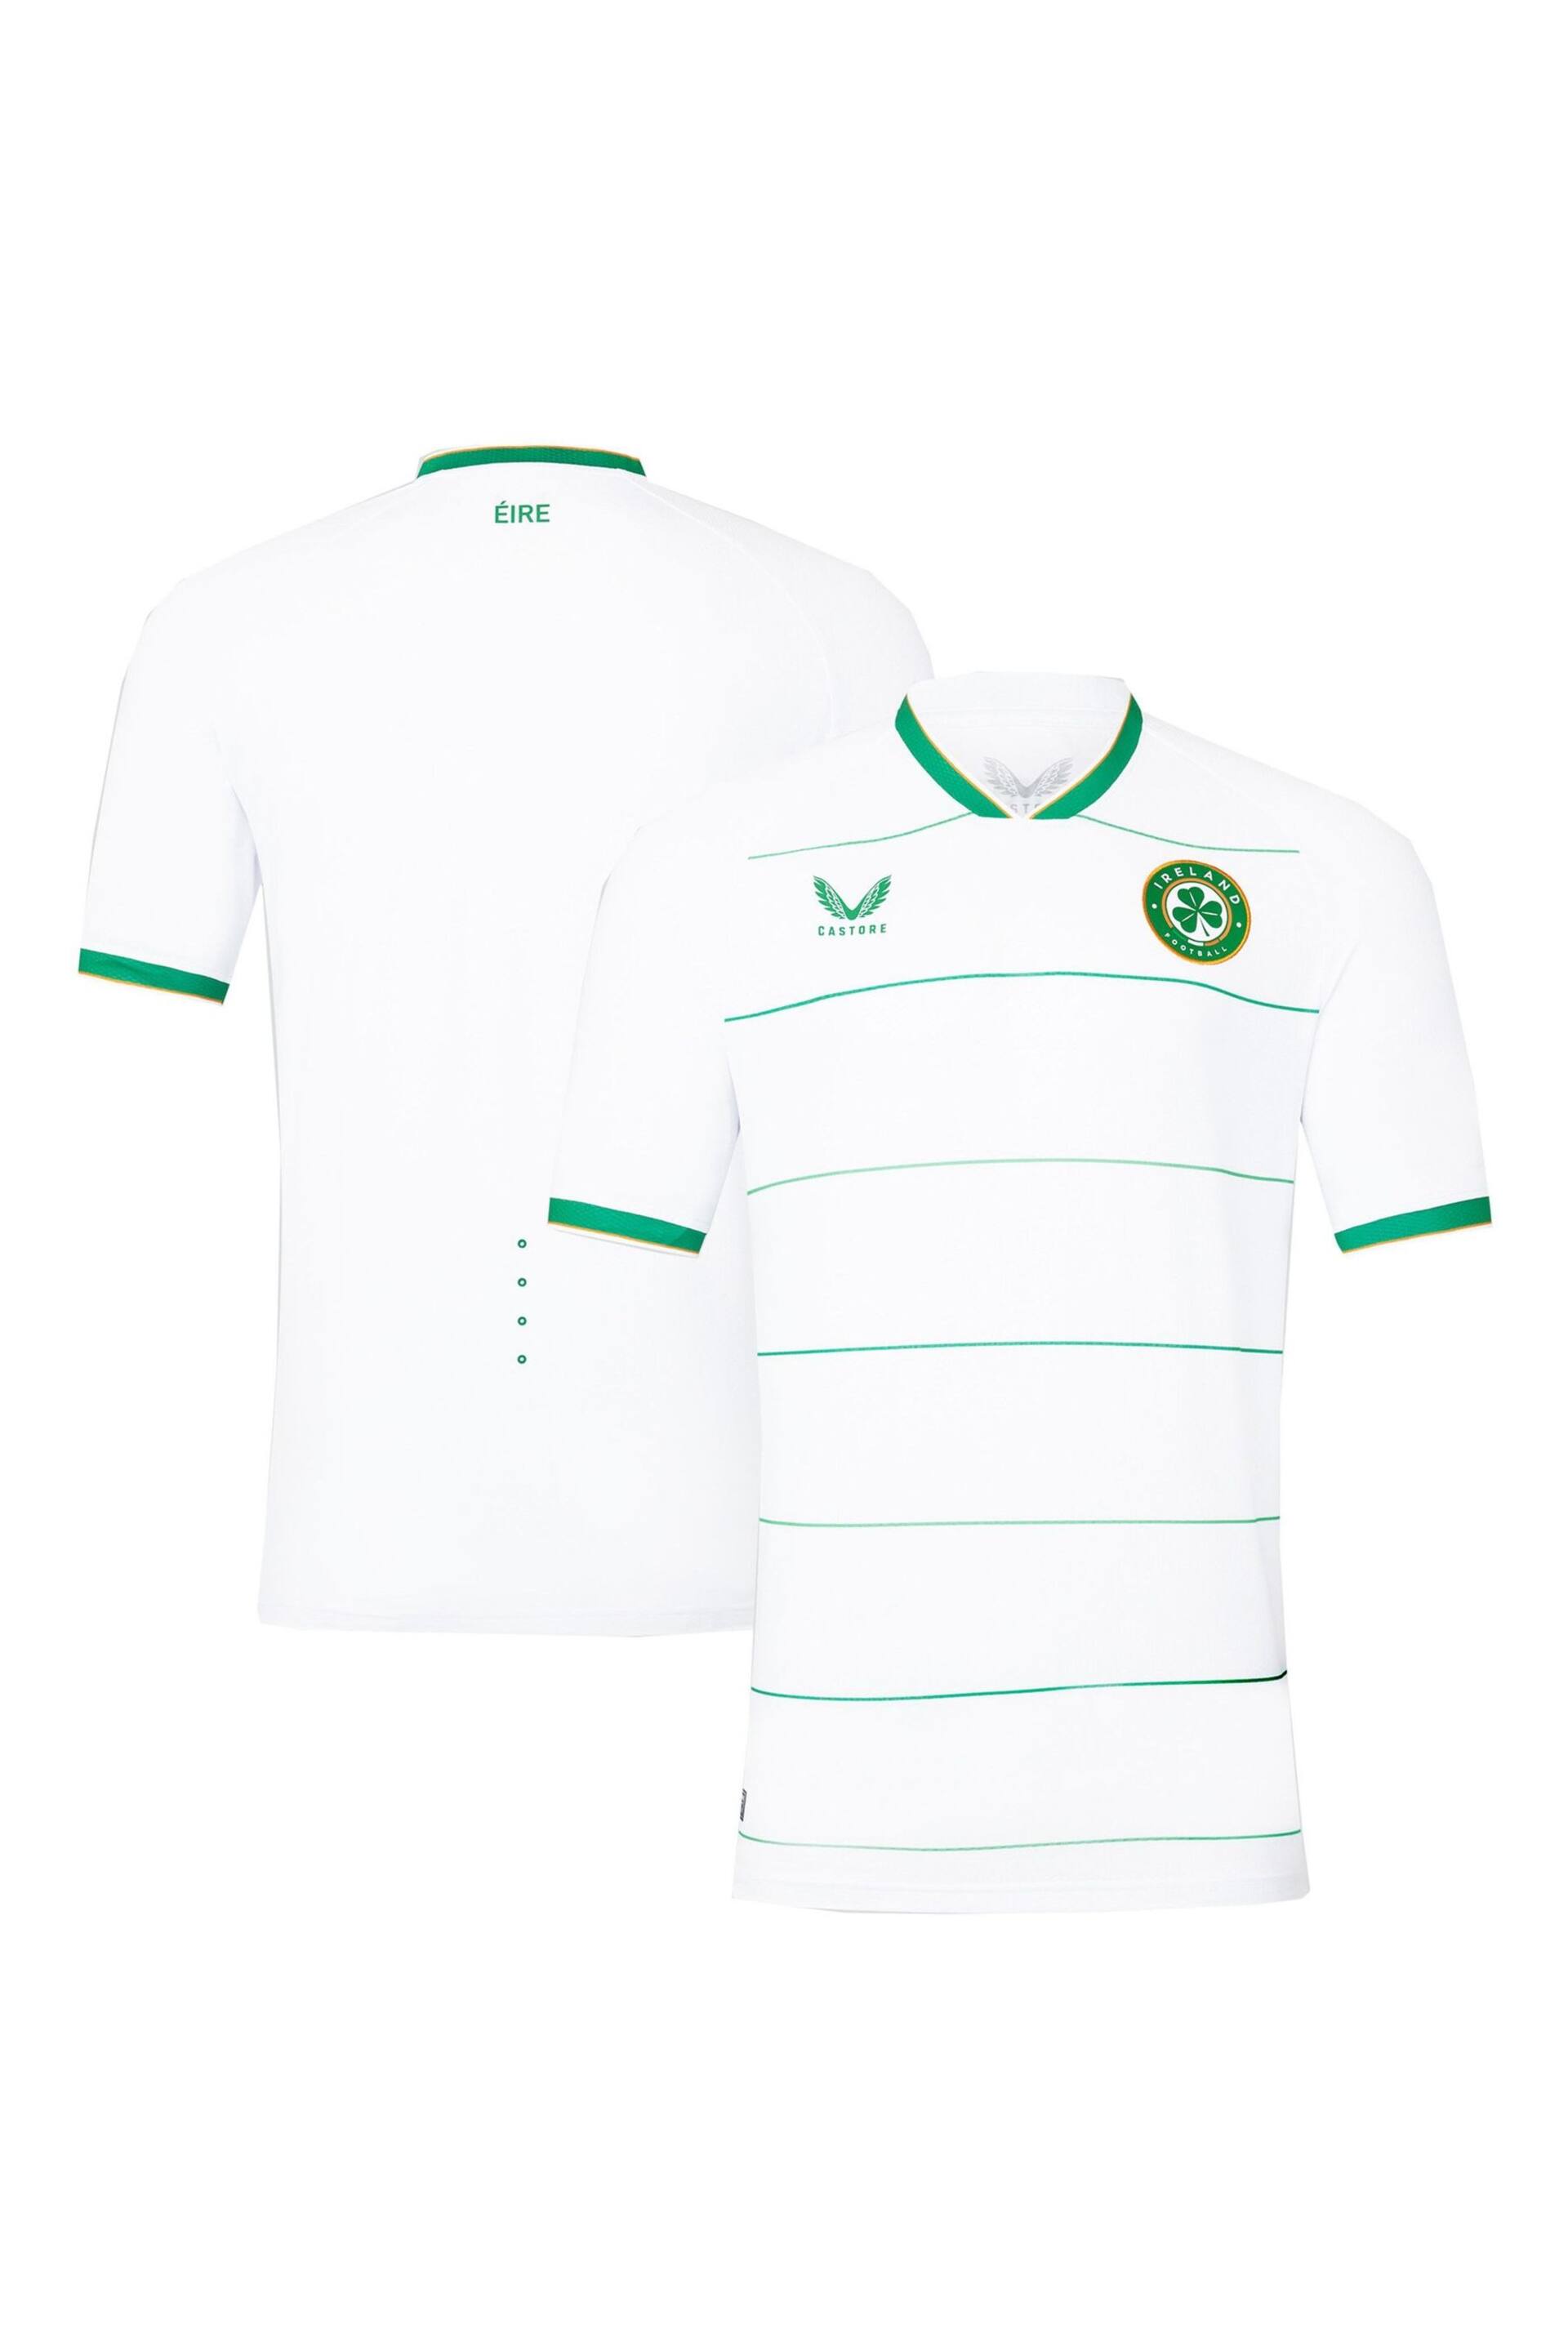 Castore Republic of Ireland Away Pro White Shirt - Image 1 of 5